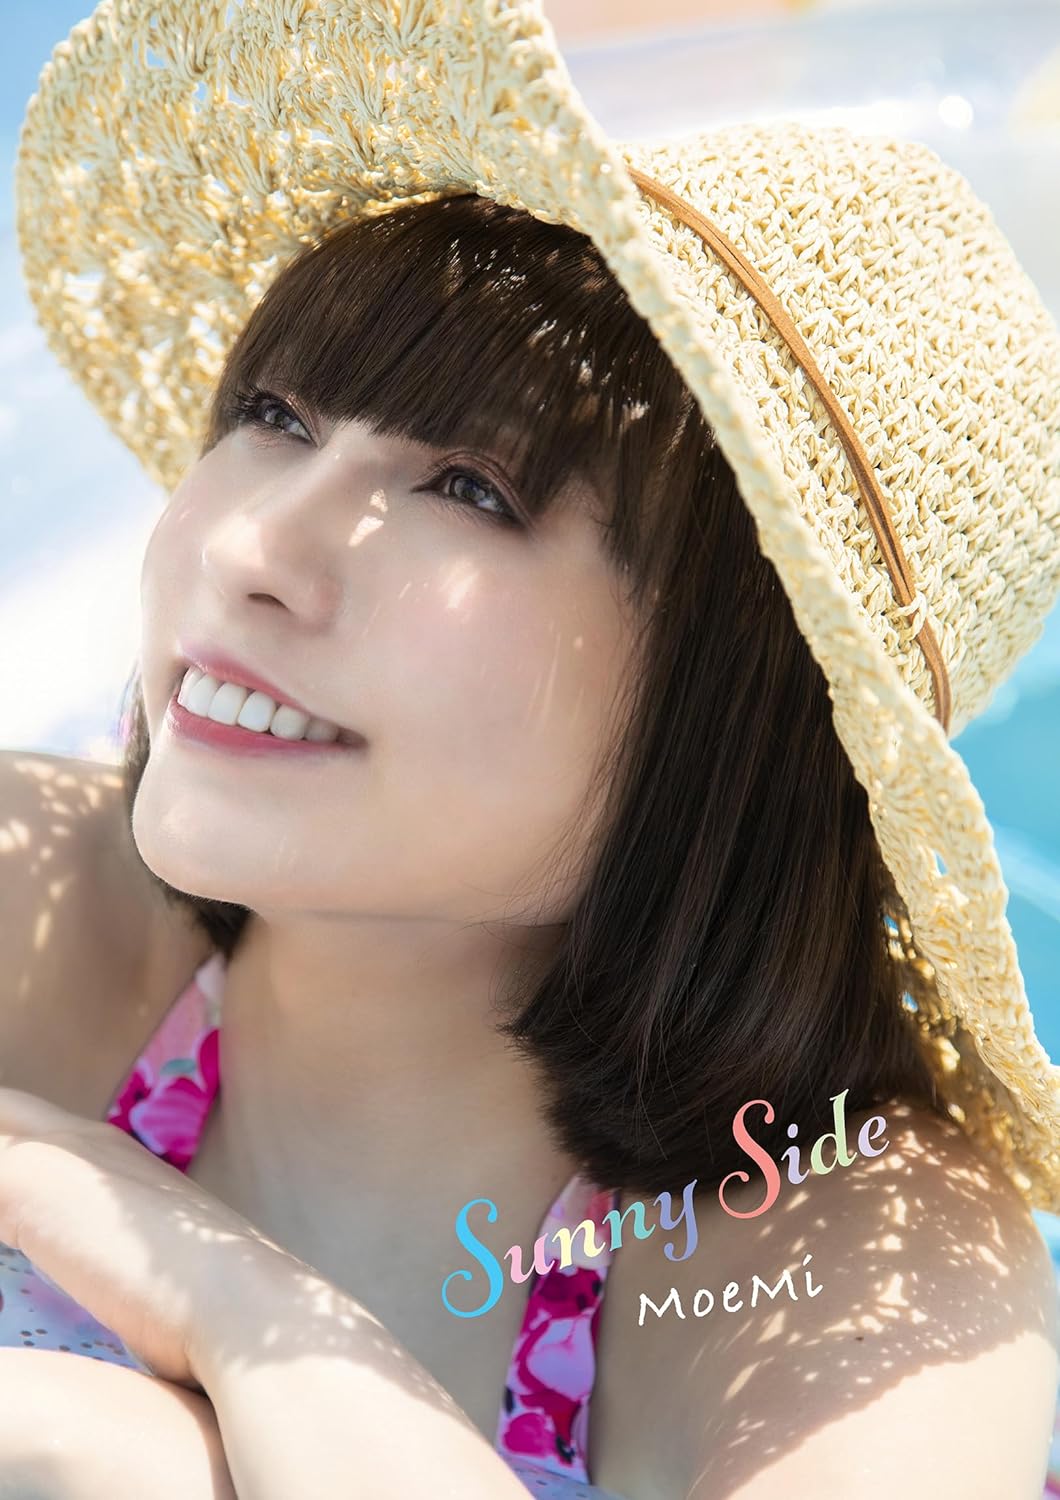 MoeMiデジタル写真集「Sunny Side」 Kindle版のサンプル画像